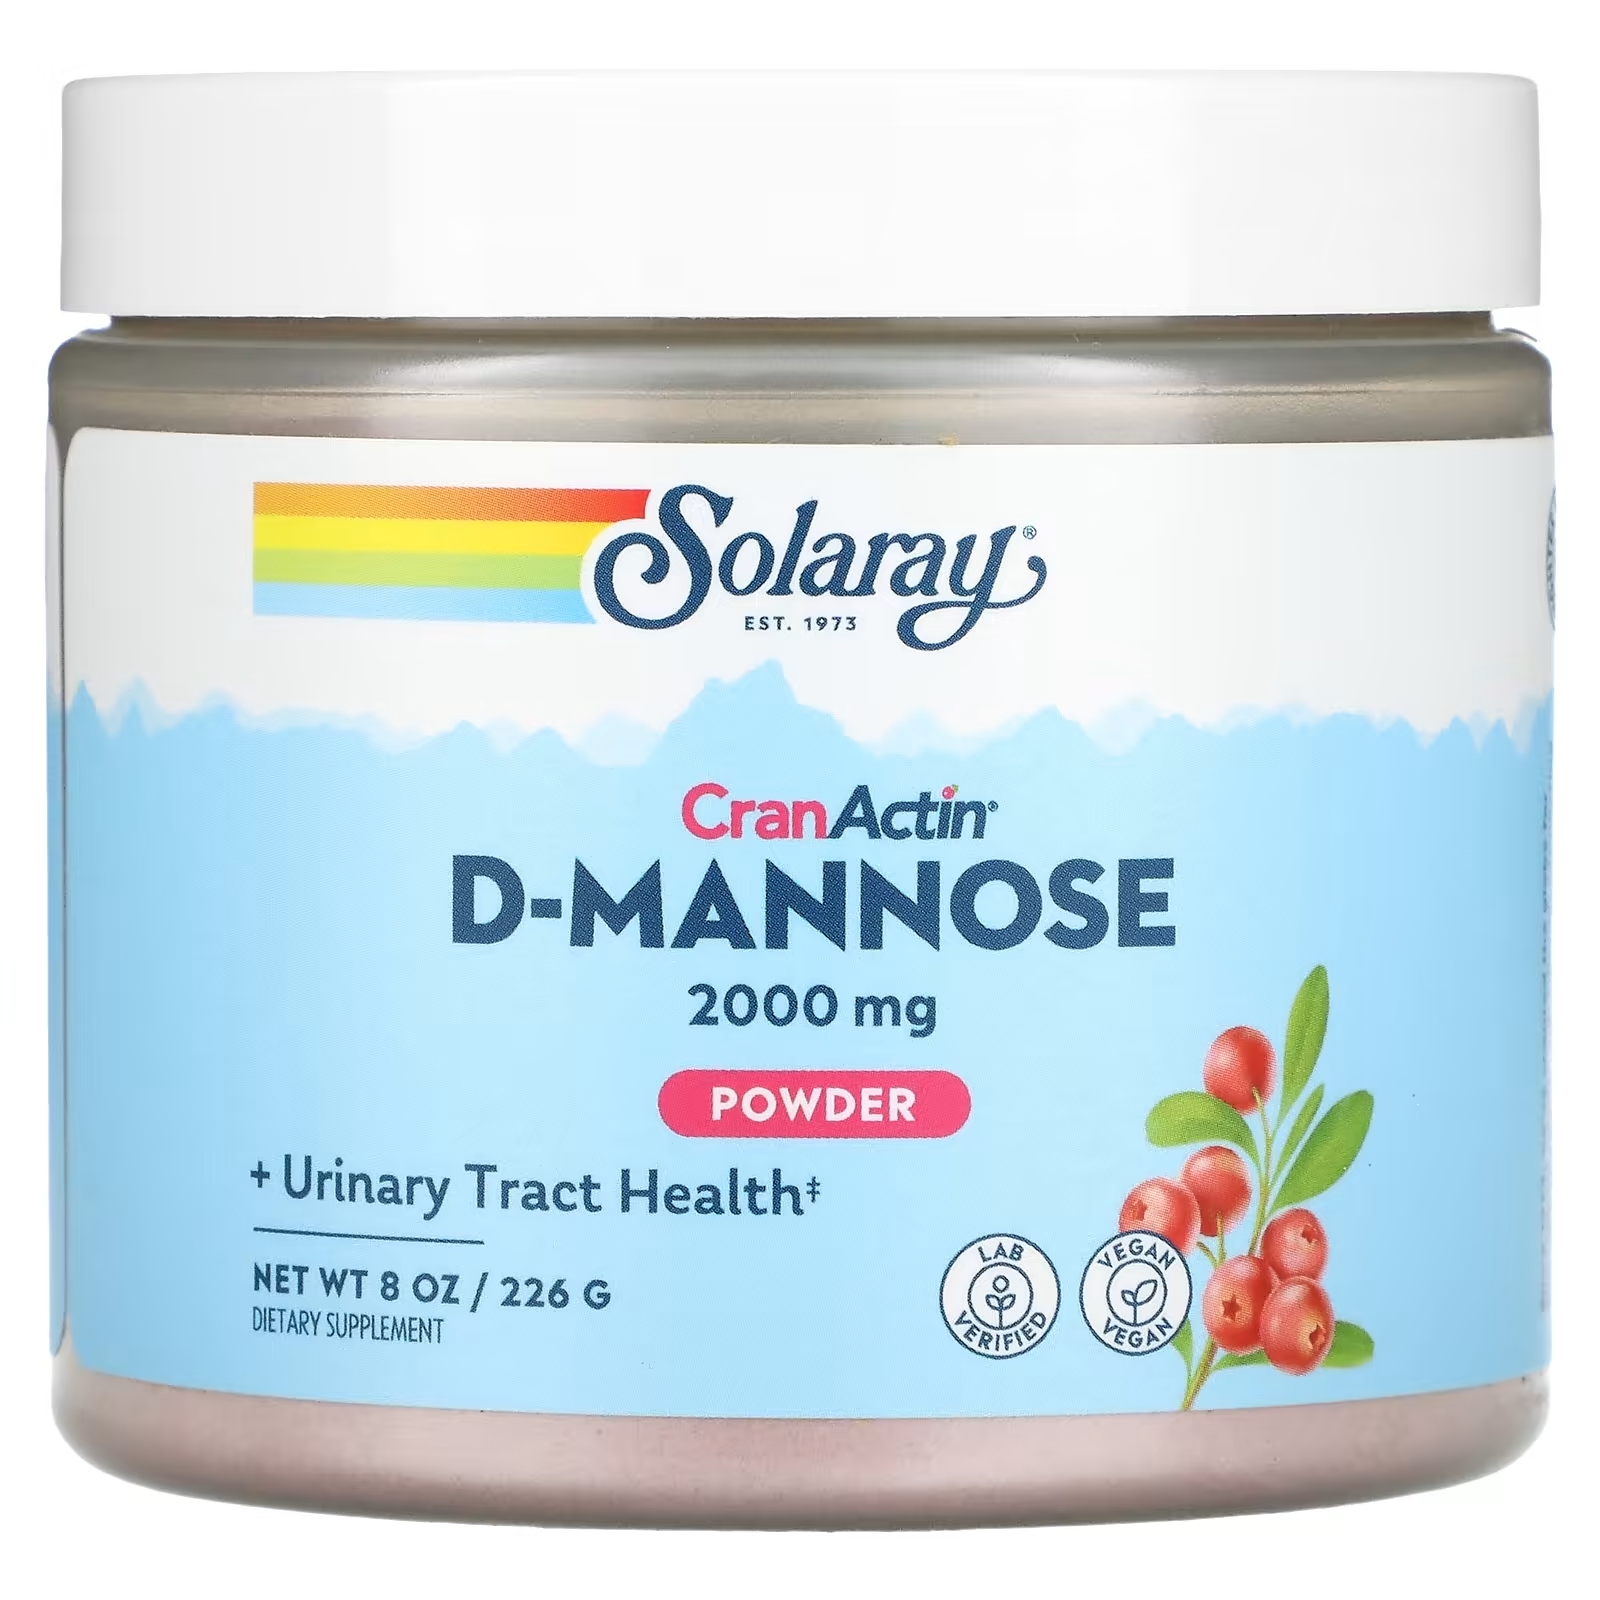 Solaray D-манноза с порошком CranActin 2000 мг, 226 г solaray d манноза с cranactin 120 вегетарианских капсул